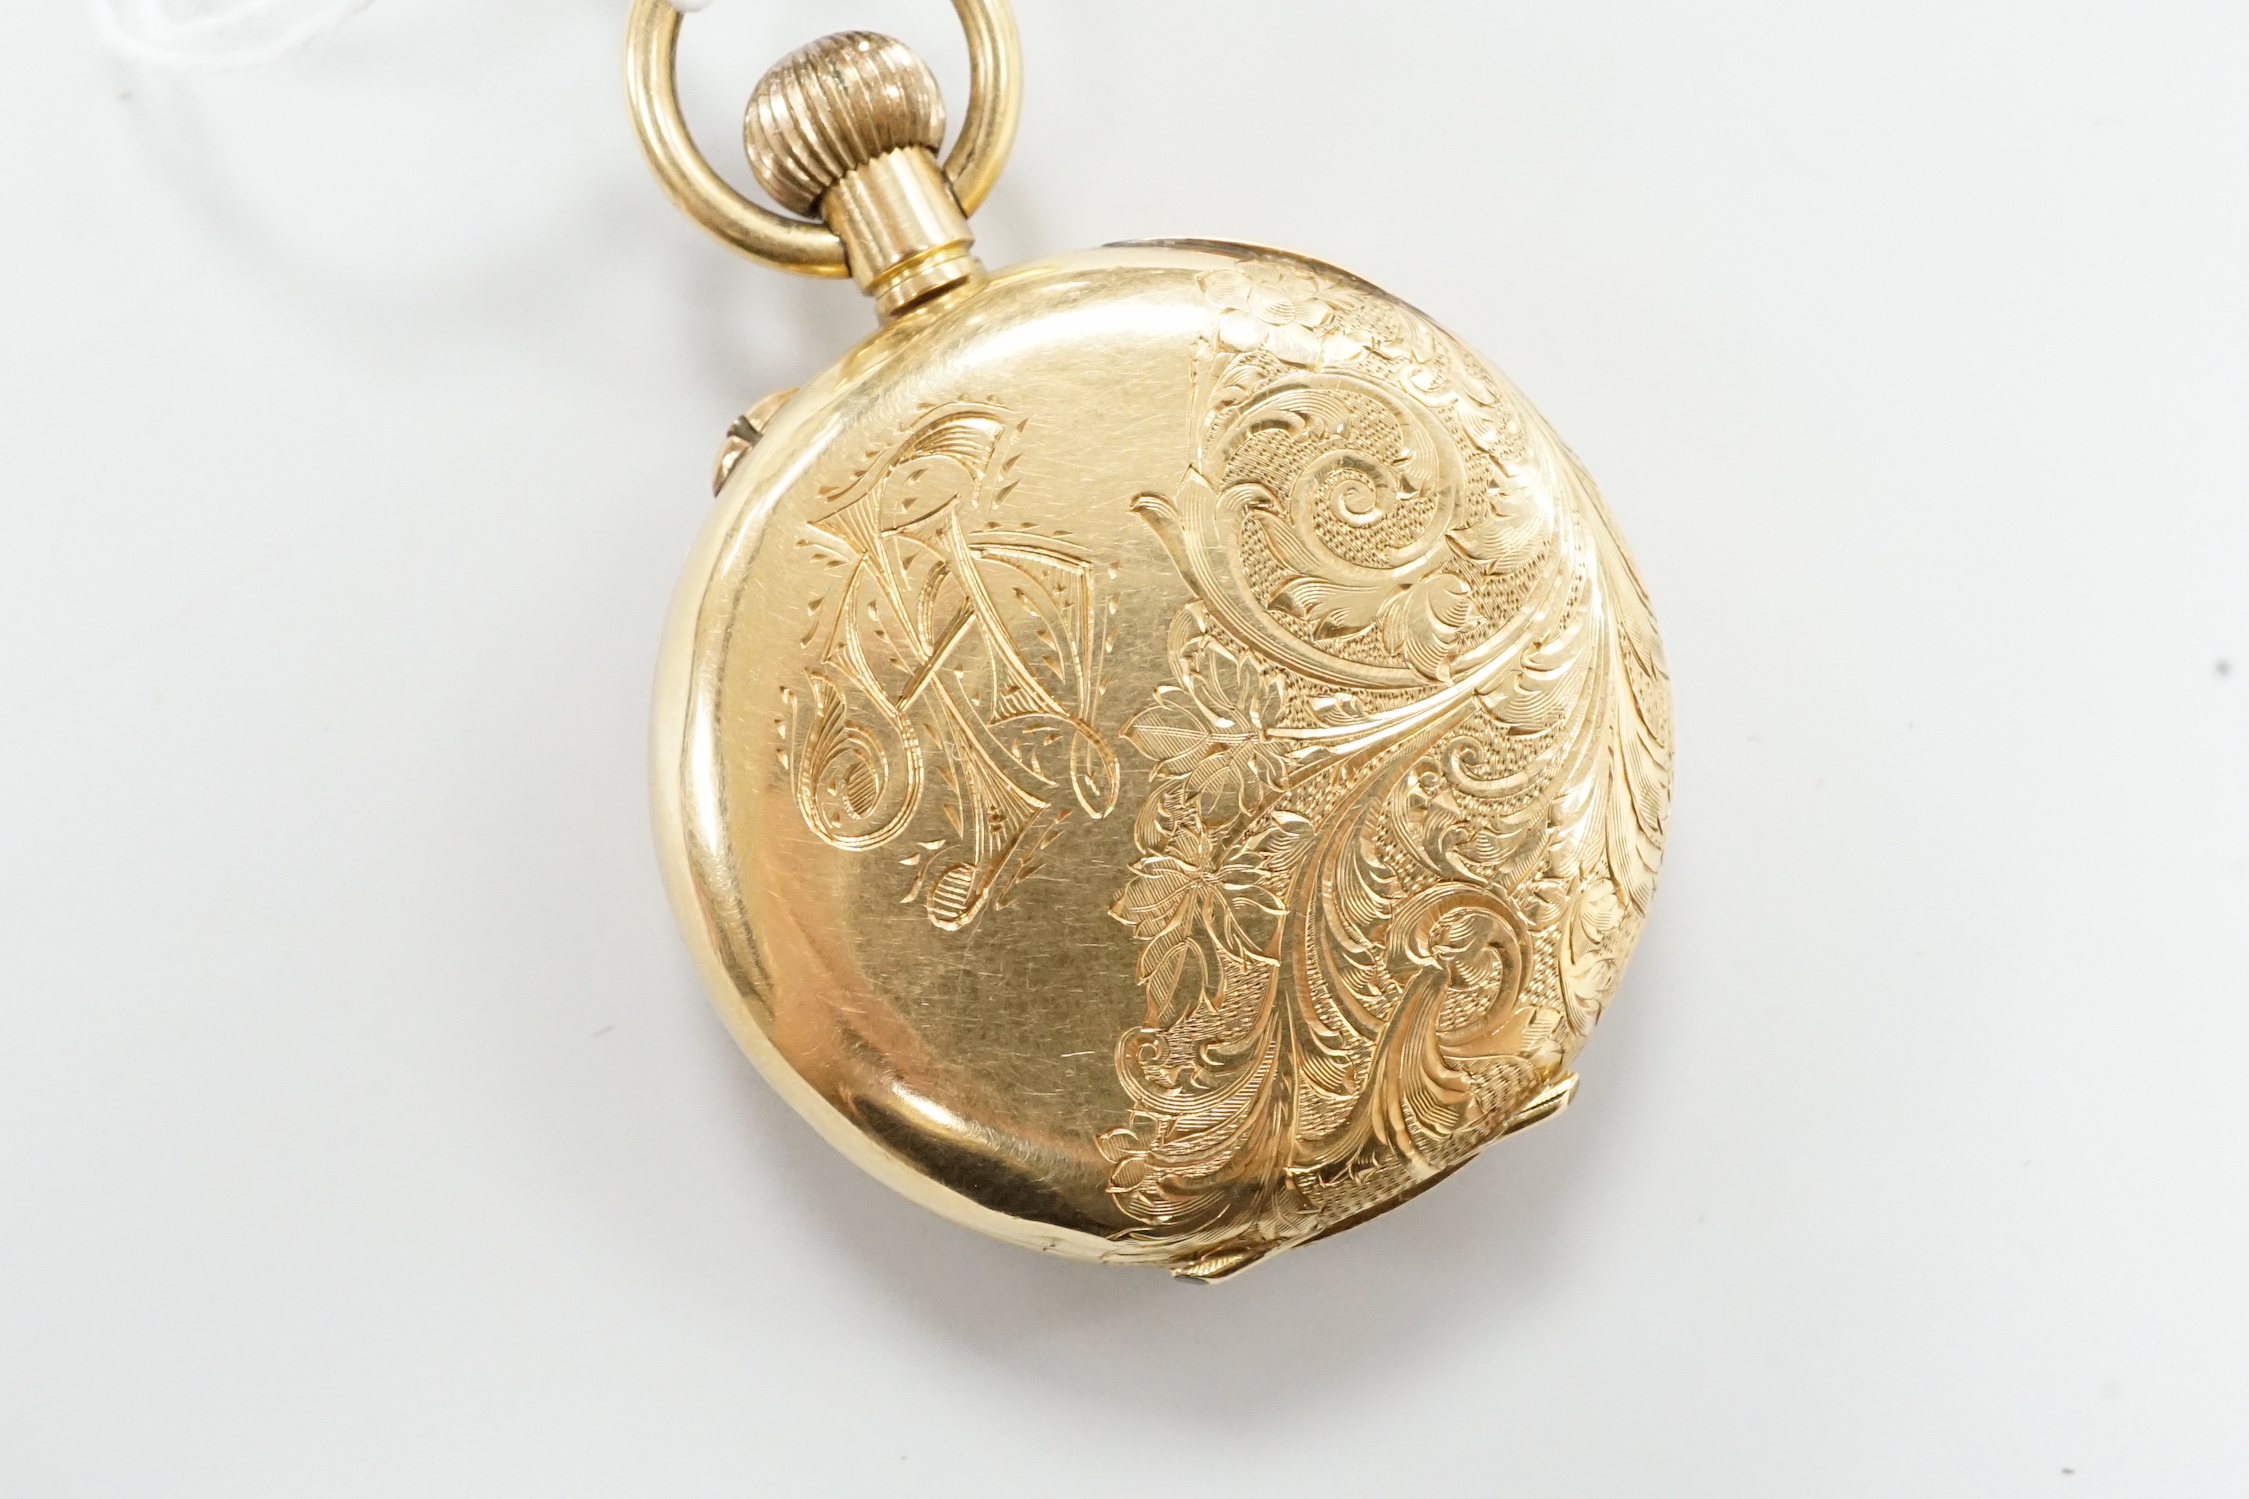 An engraved 18k open faced keyless fob watch, with Roman dial, case diameter 36mm